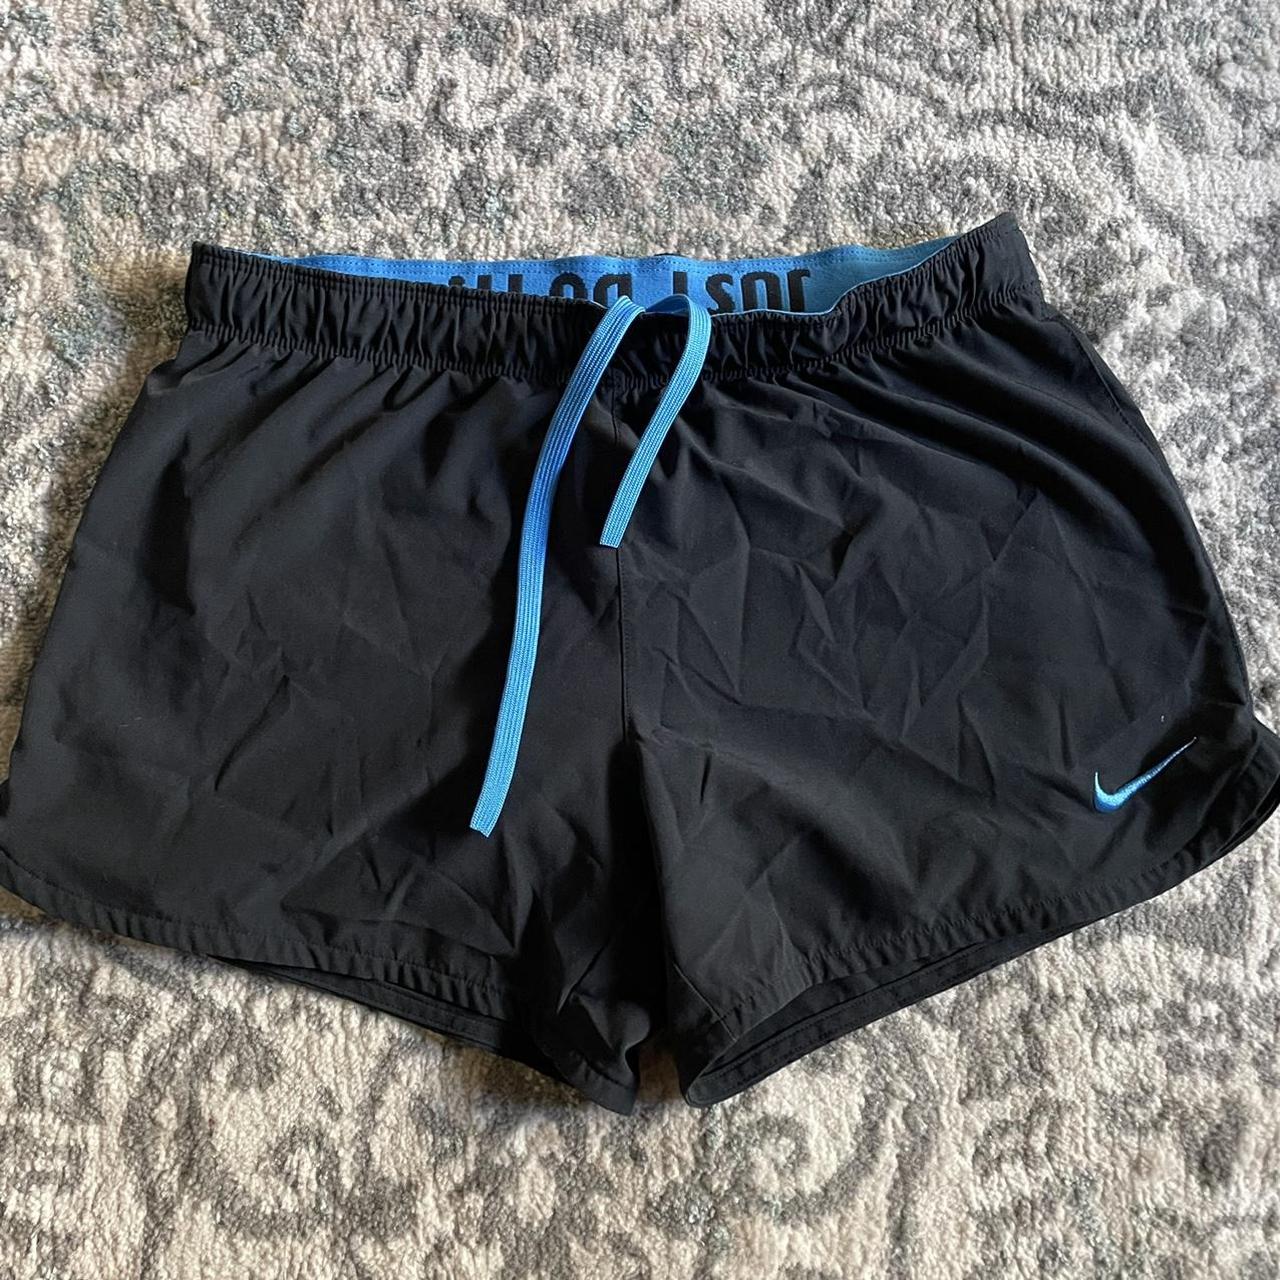 Nike pro-shorts - Depop